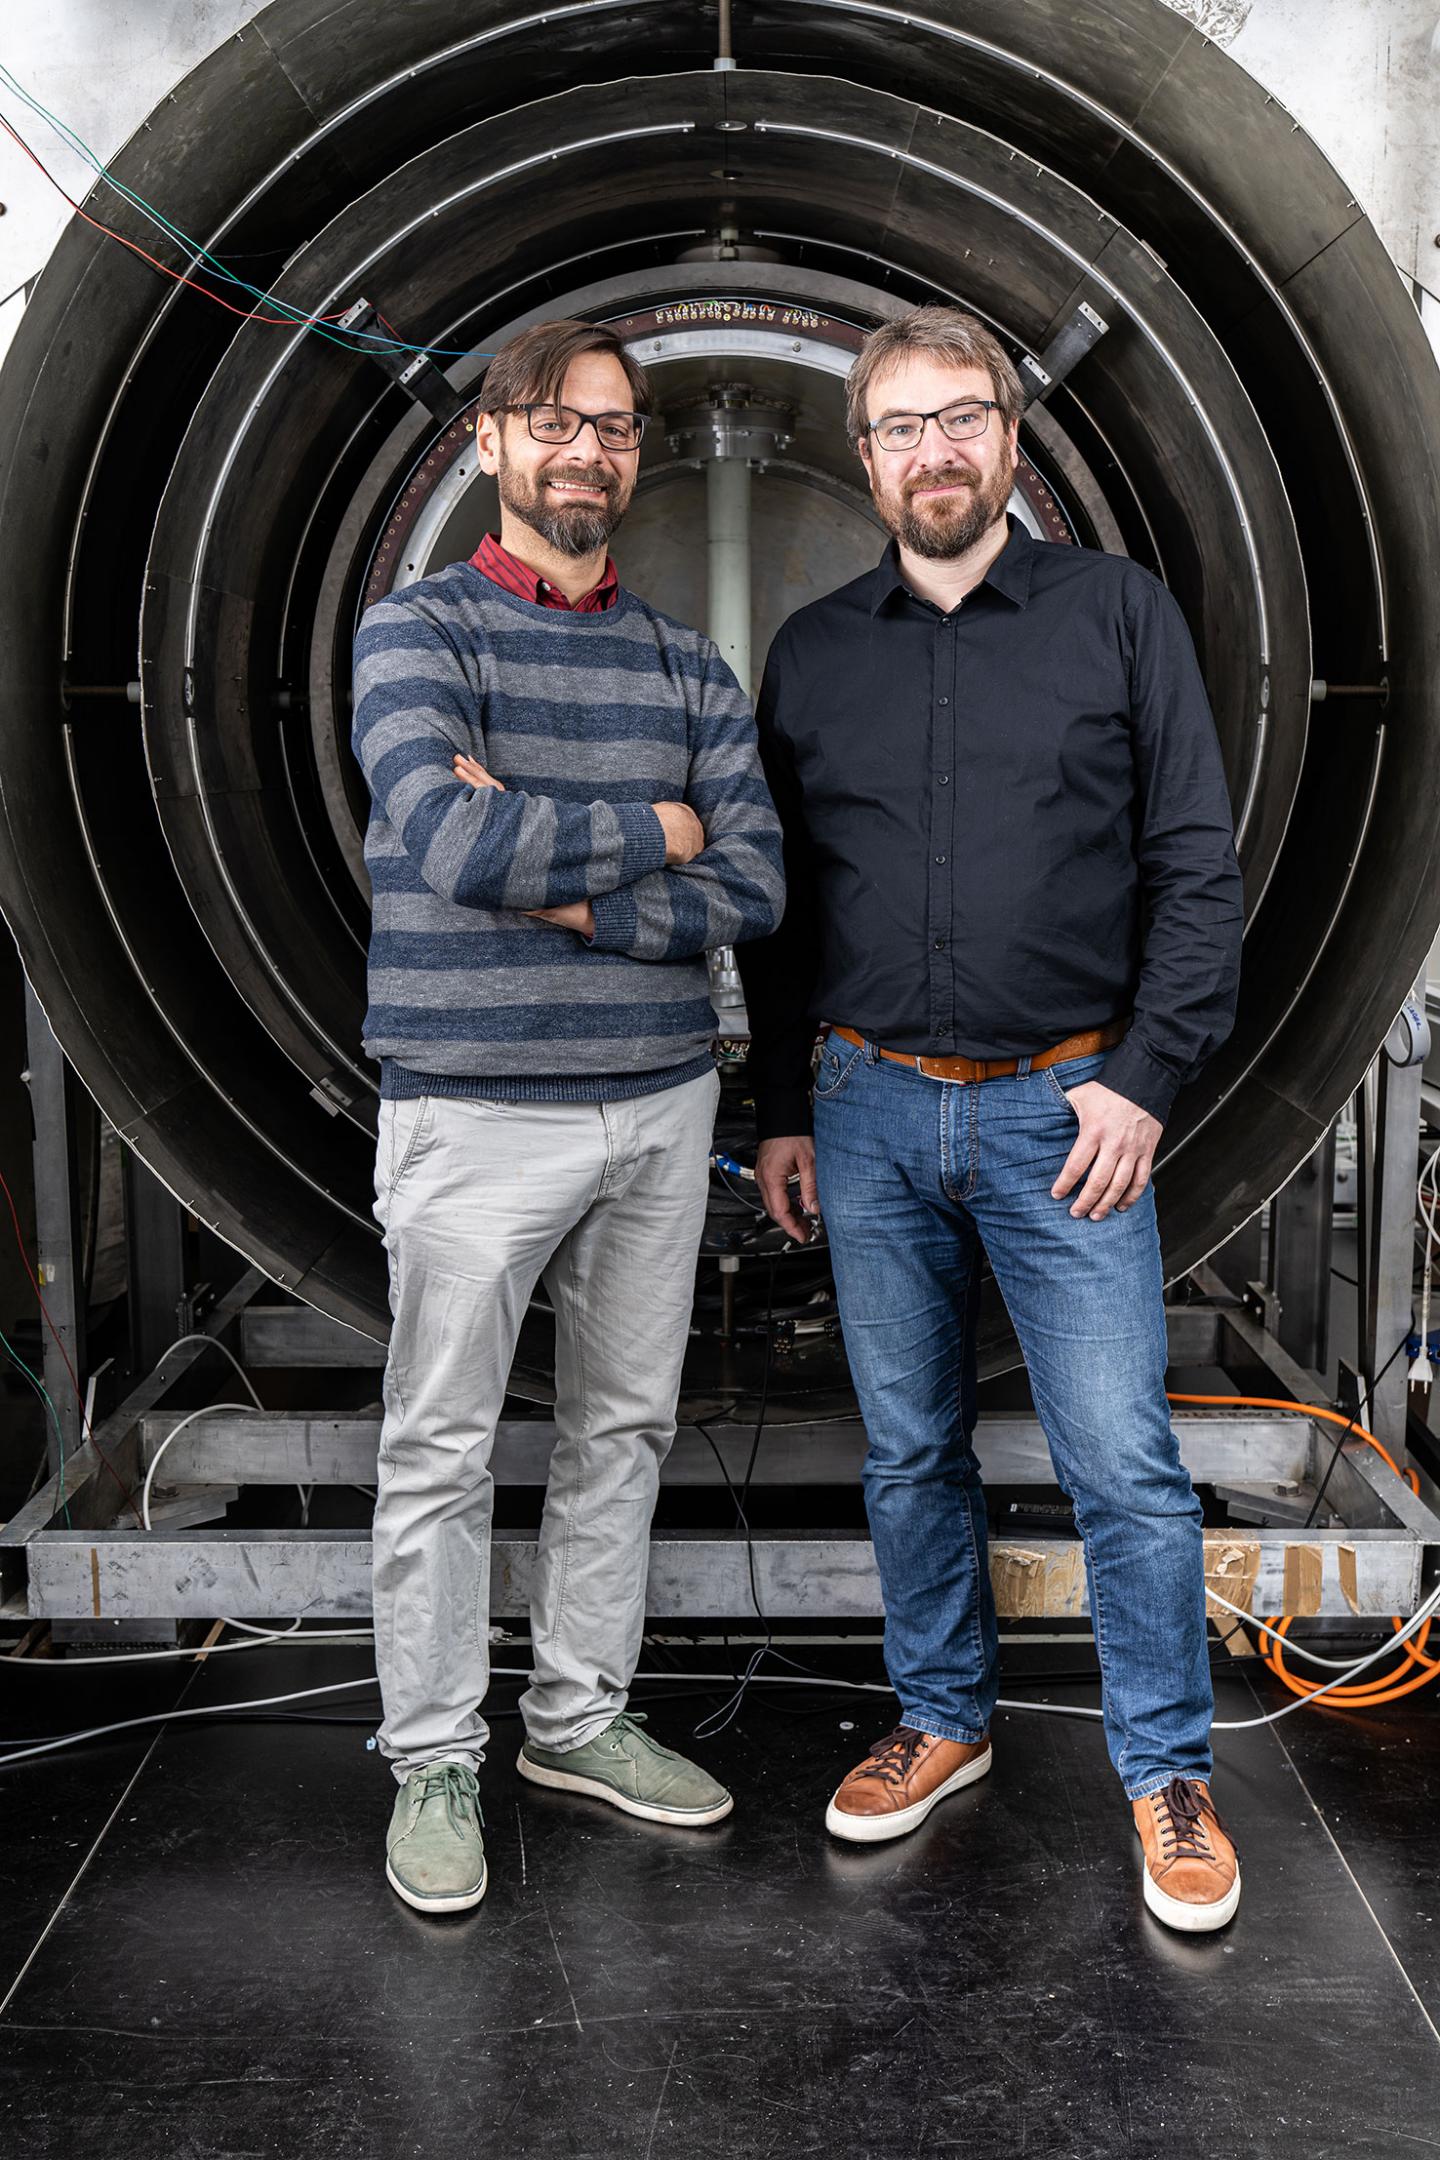 Physicists Philipp Schmidt-Wellenburg and Georg Bison